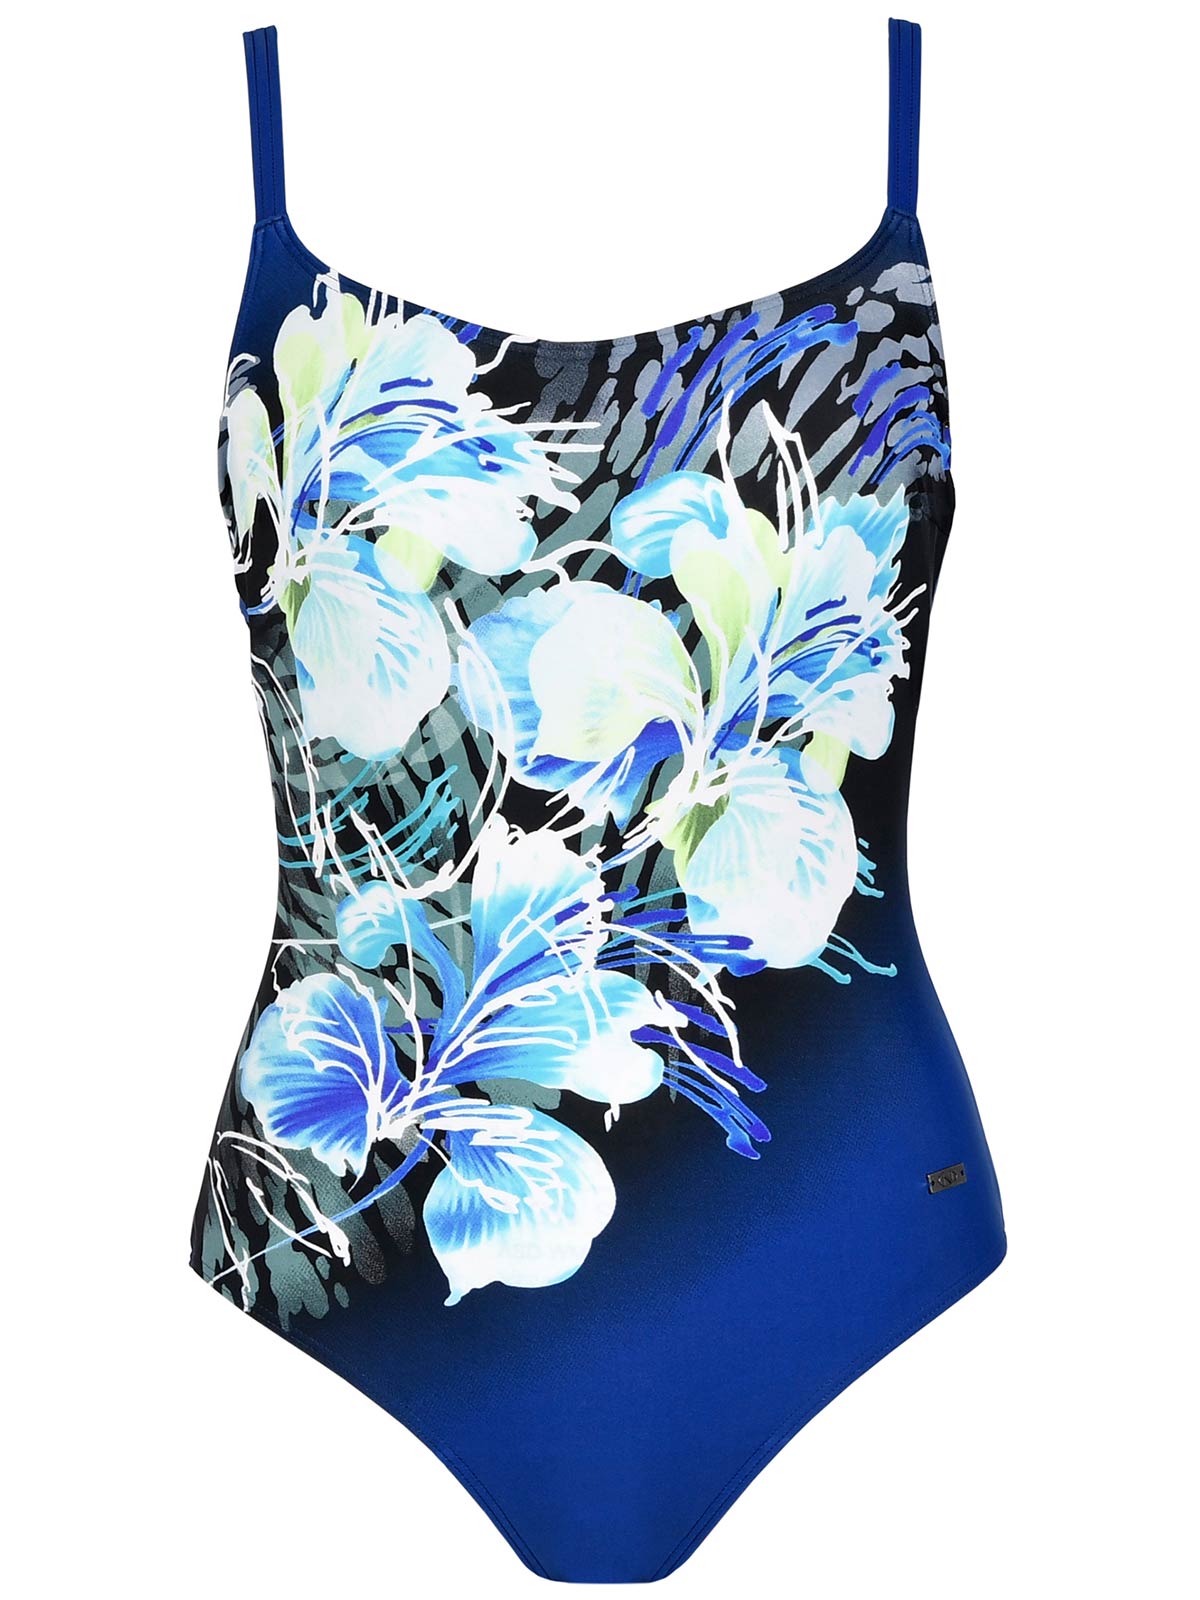 Naturana - - Naturana MARINE Floral Print Wired Swimsuit - Size 10 B/32